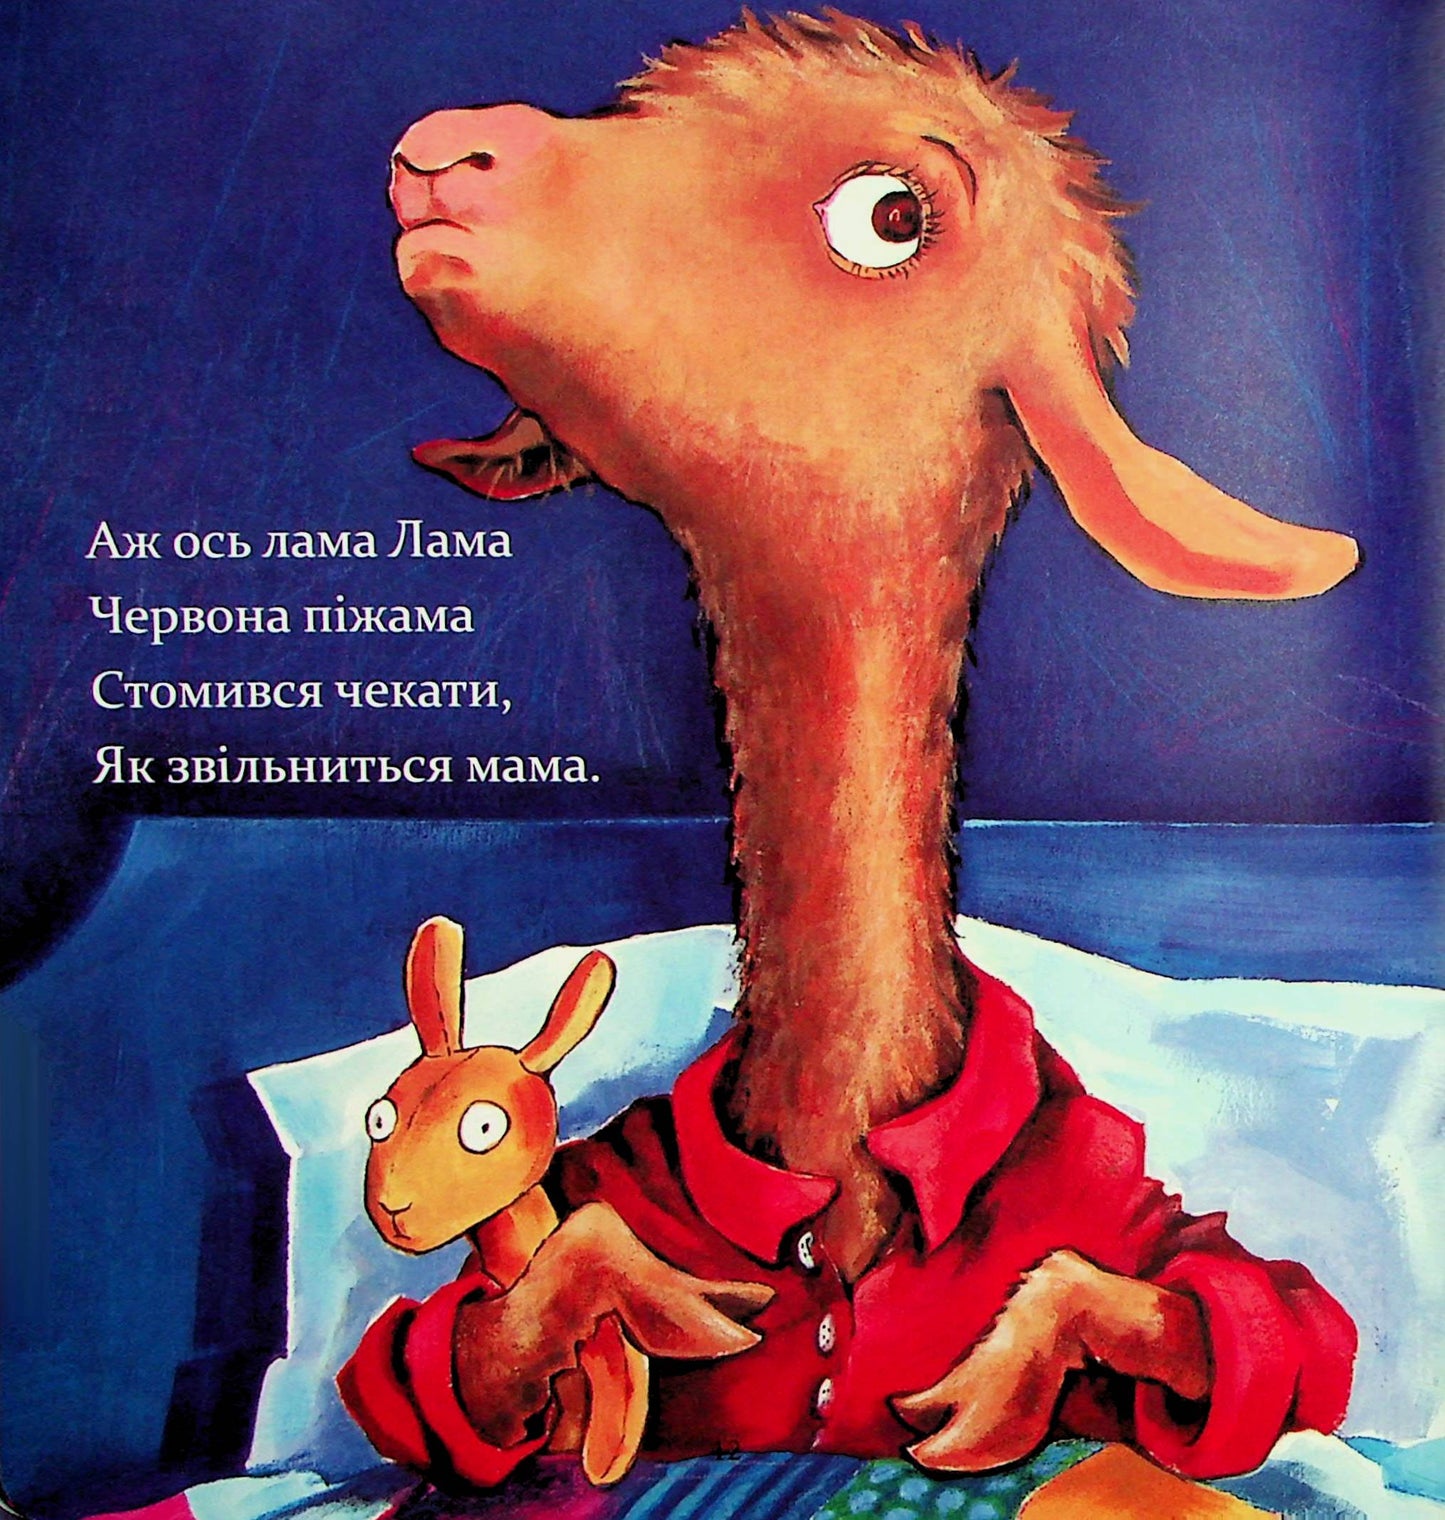 Llama Llama red pajamas and his mother / Лама Лама червона піжама і його мама Анна Дьюдни 9786178253875-12